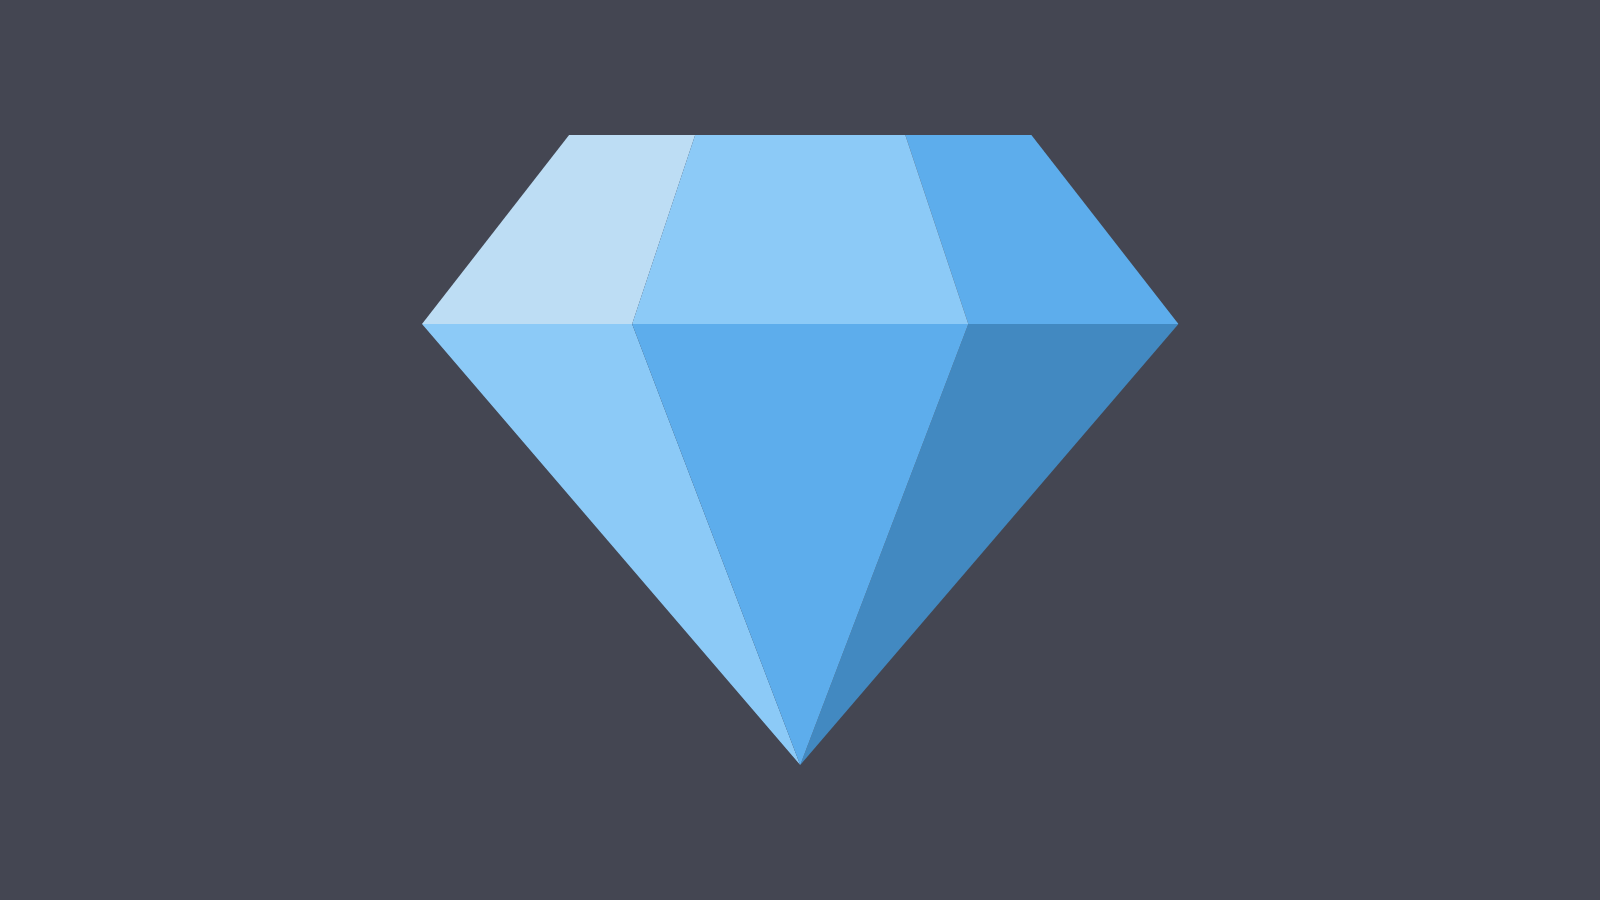 A graphic of a diamond